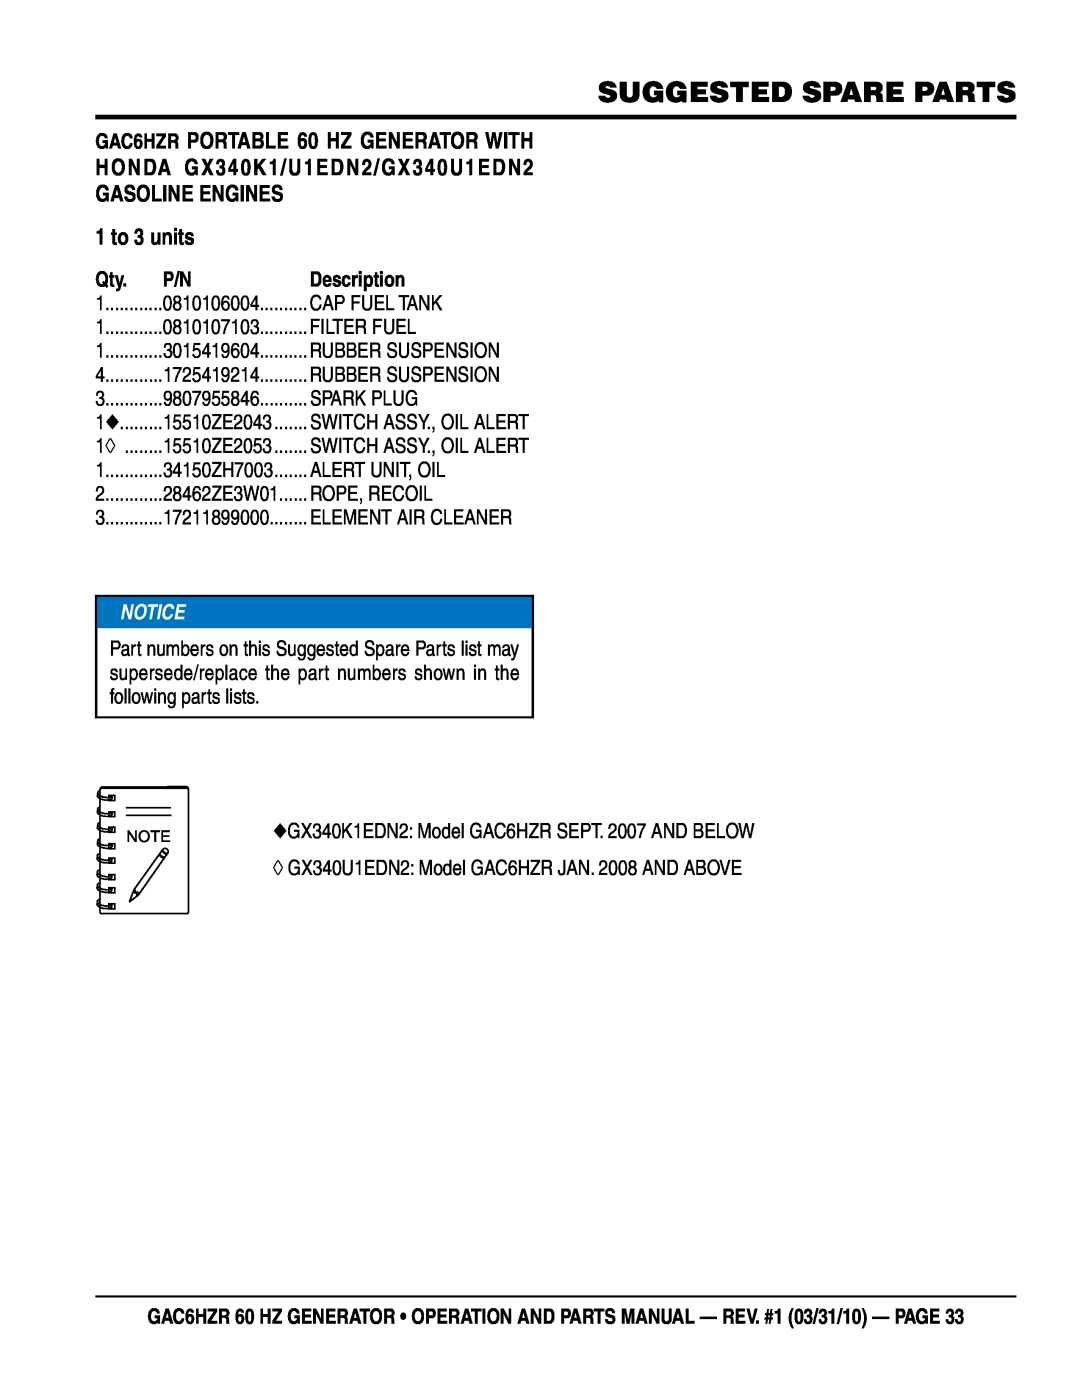 Multiquip GAC-6HZR manual Suggested Spare Parts, 1 to 3 units, description 